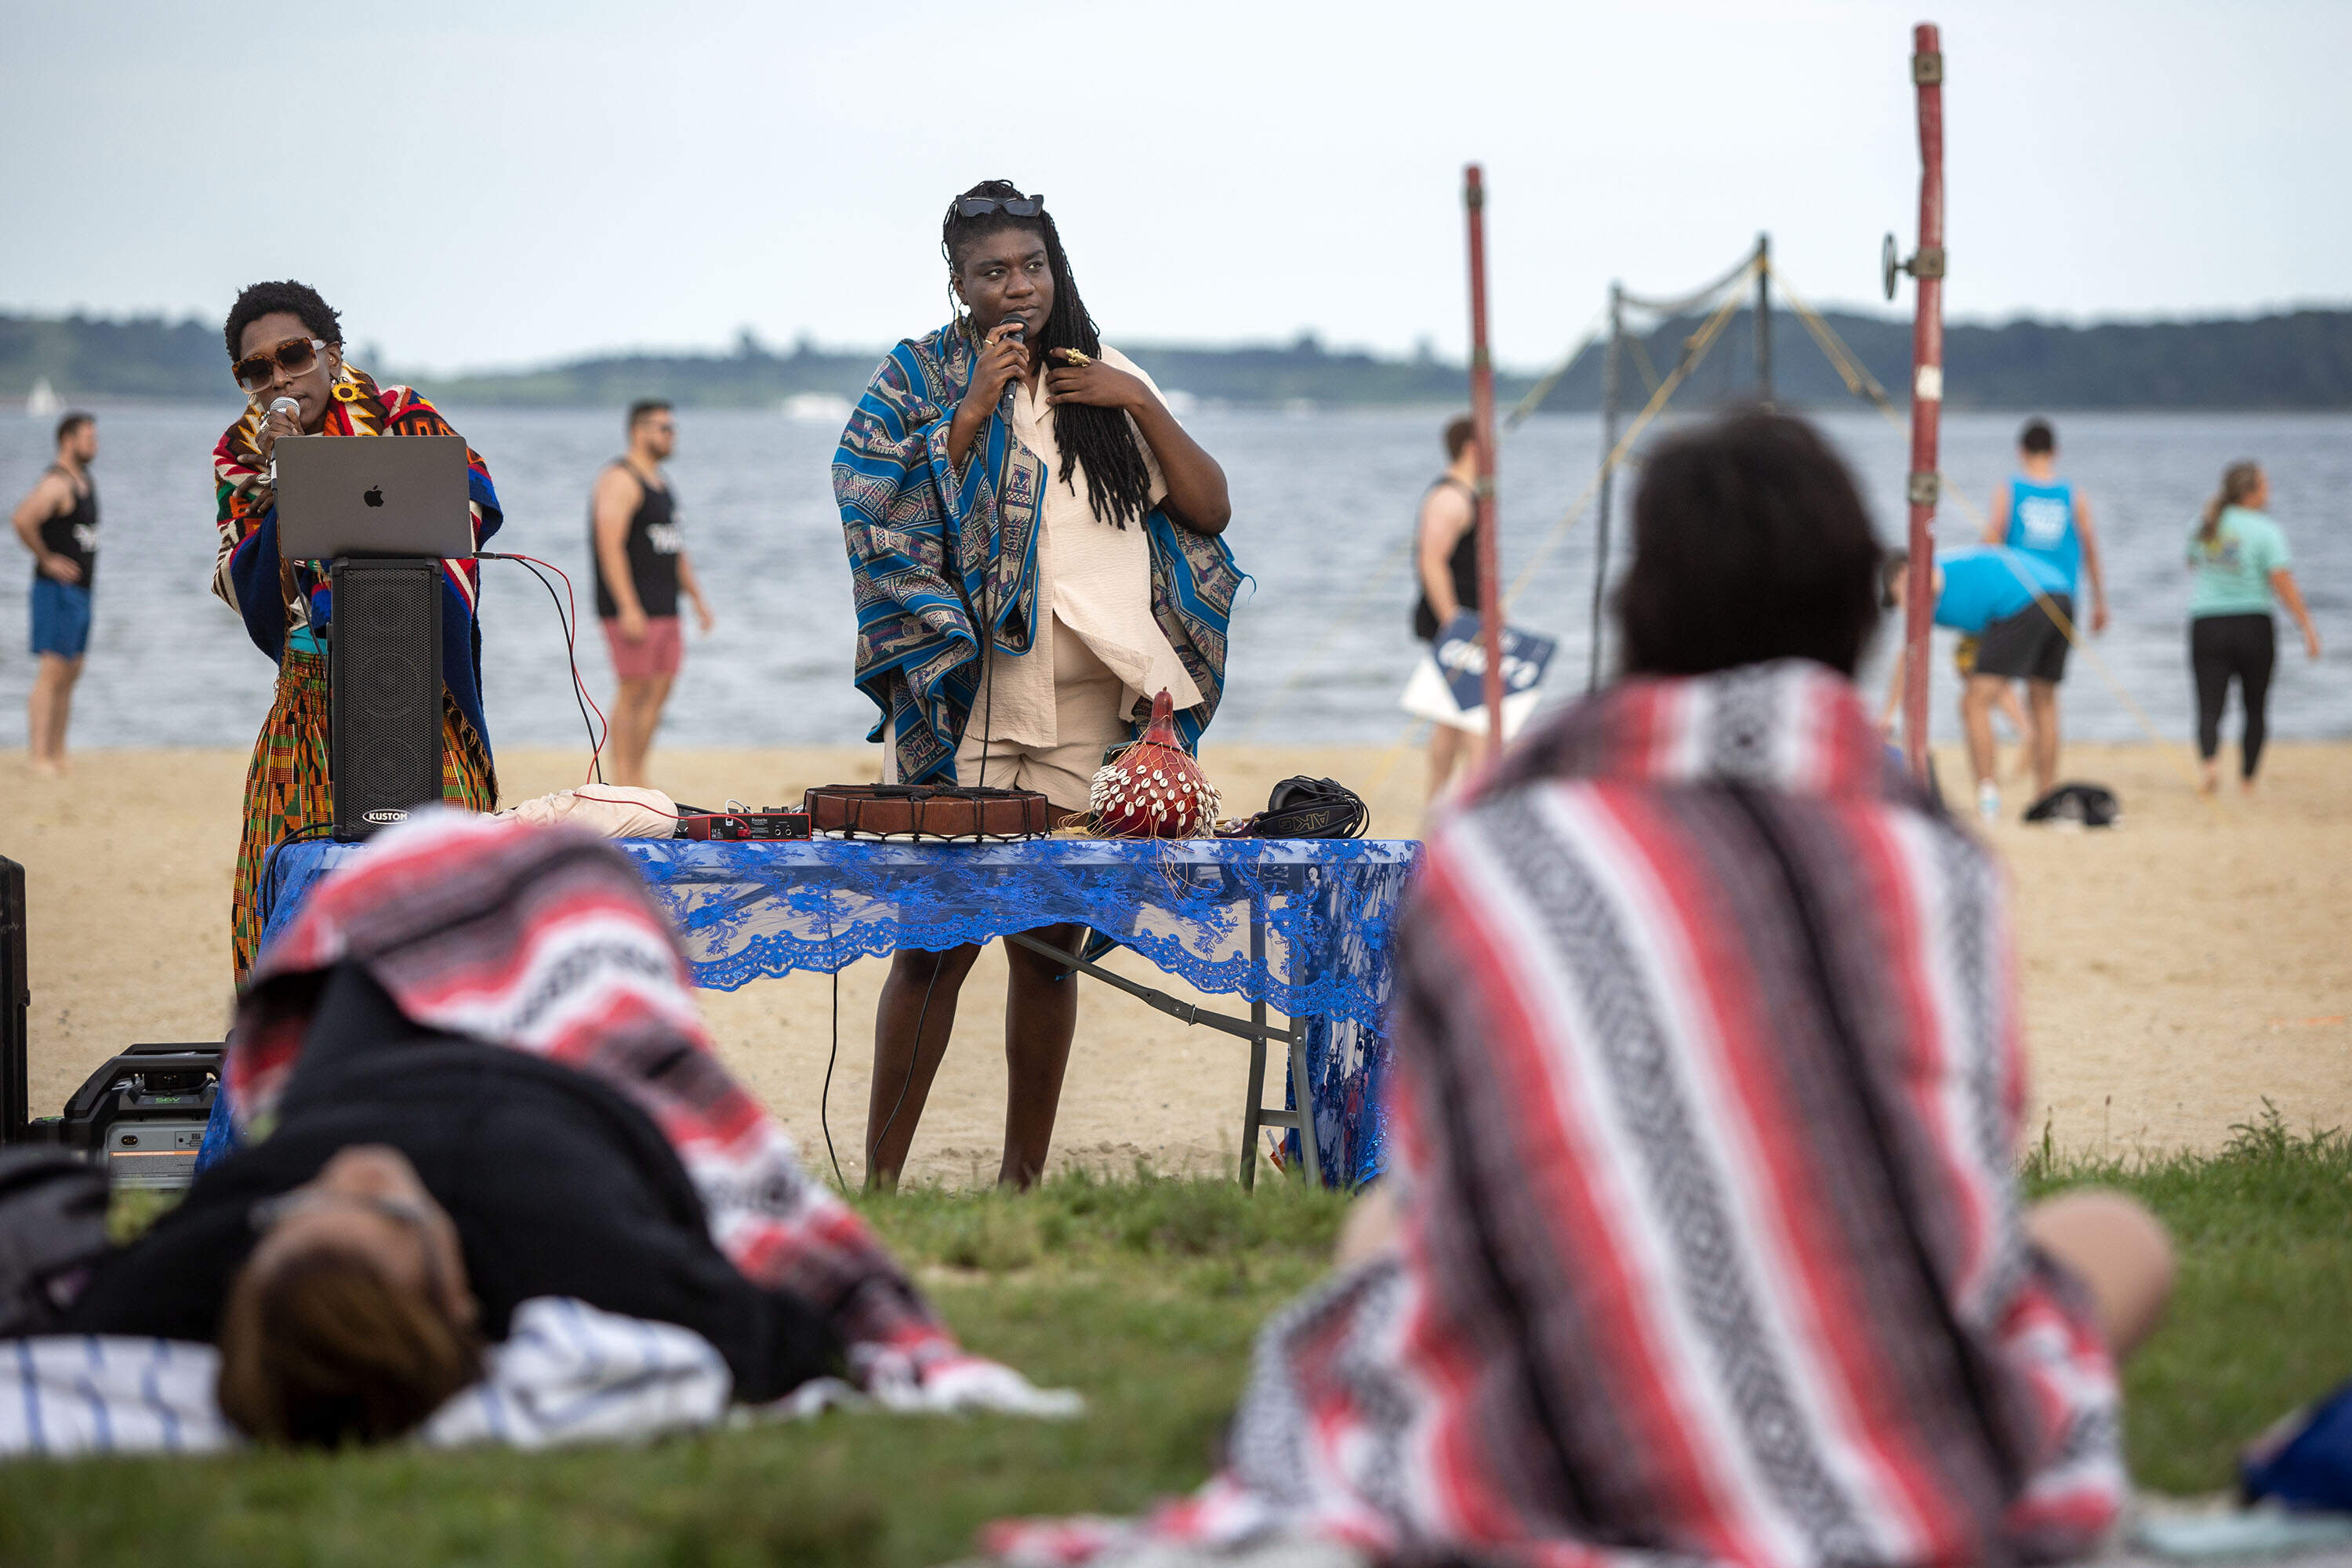 Performance artist Dzidzor glances across the beach as vocalist Thamanai sings at a rest activation at Carson Beach in Boston. (Robin Lubbock/WBUR)